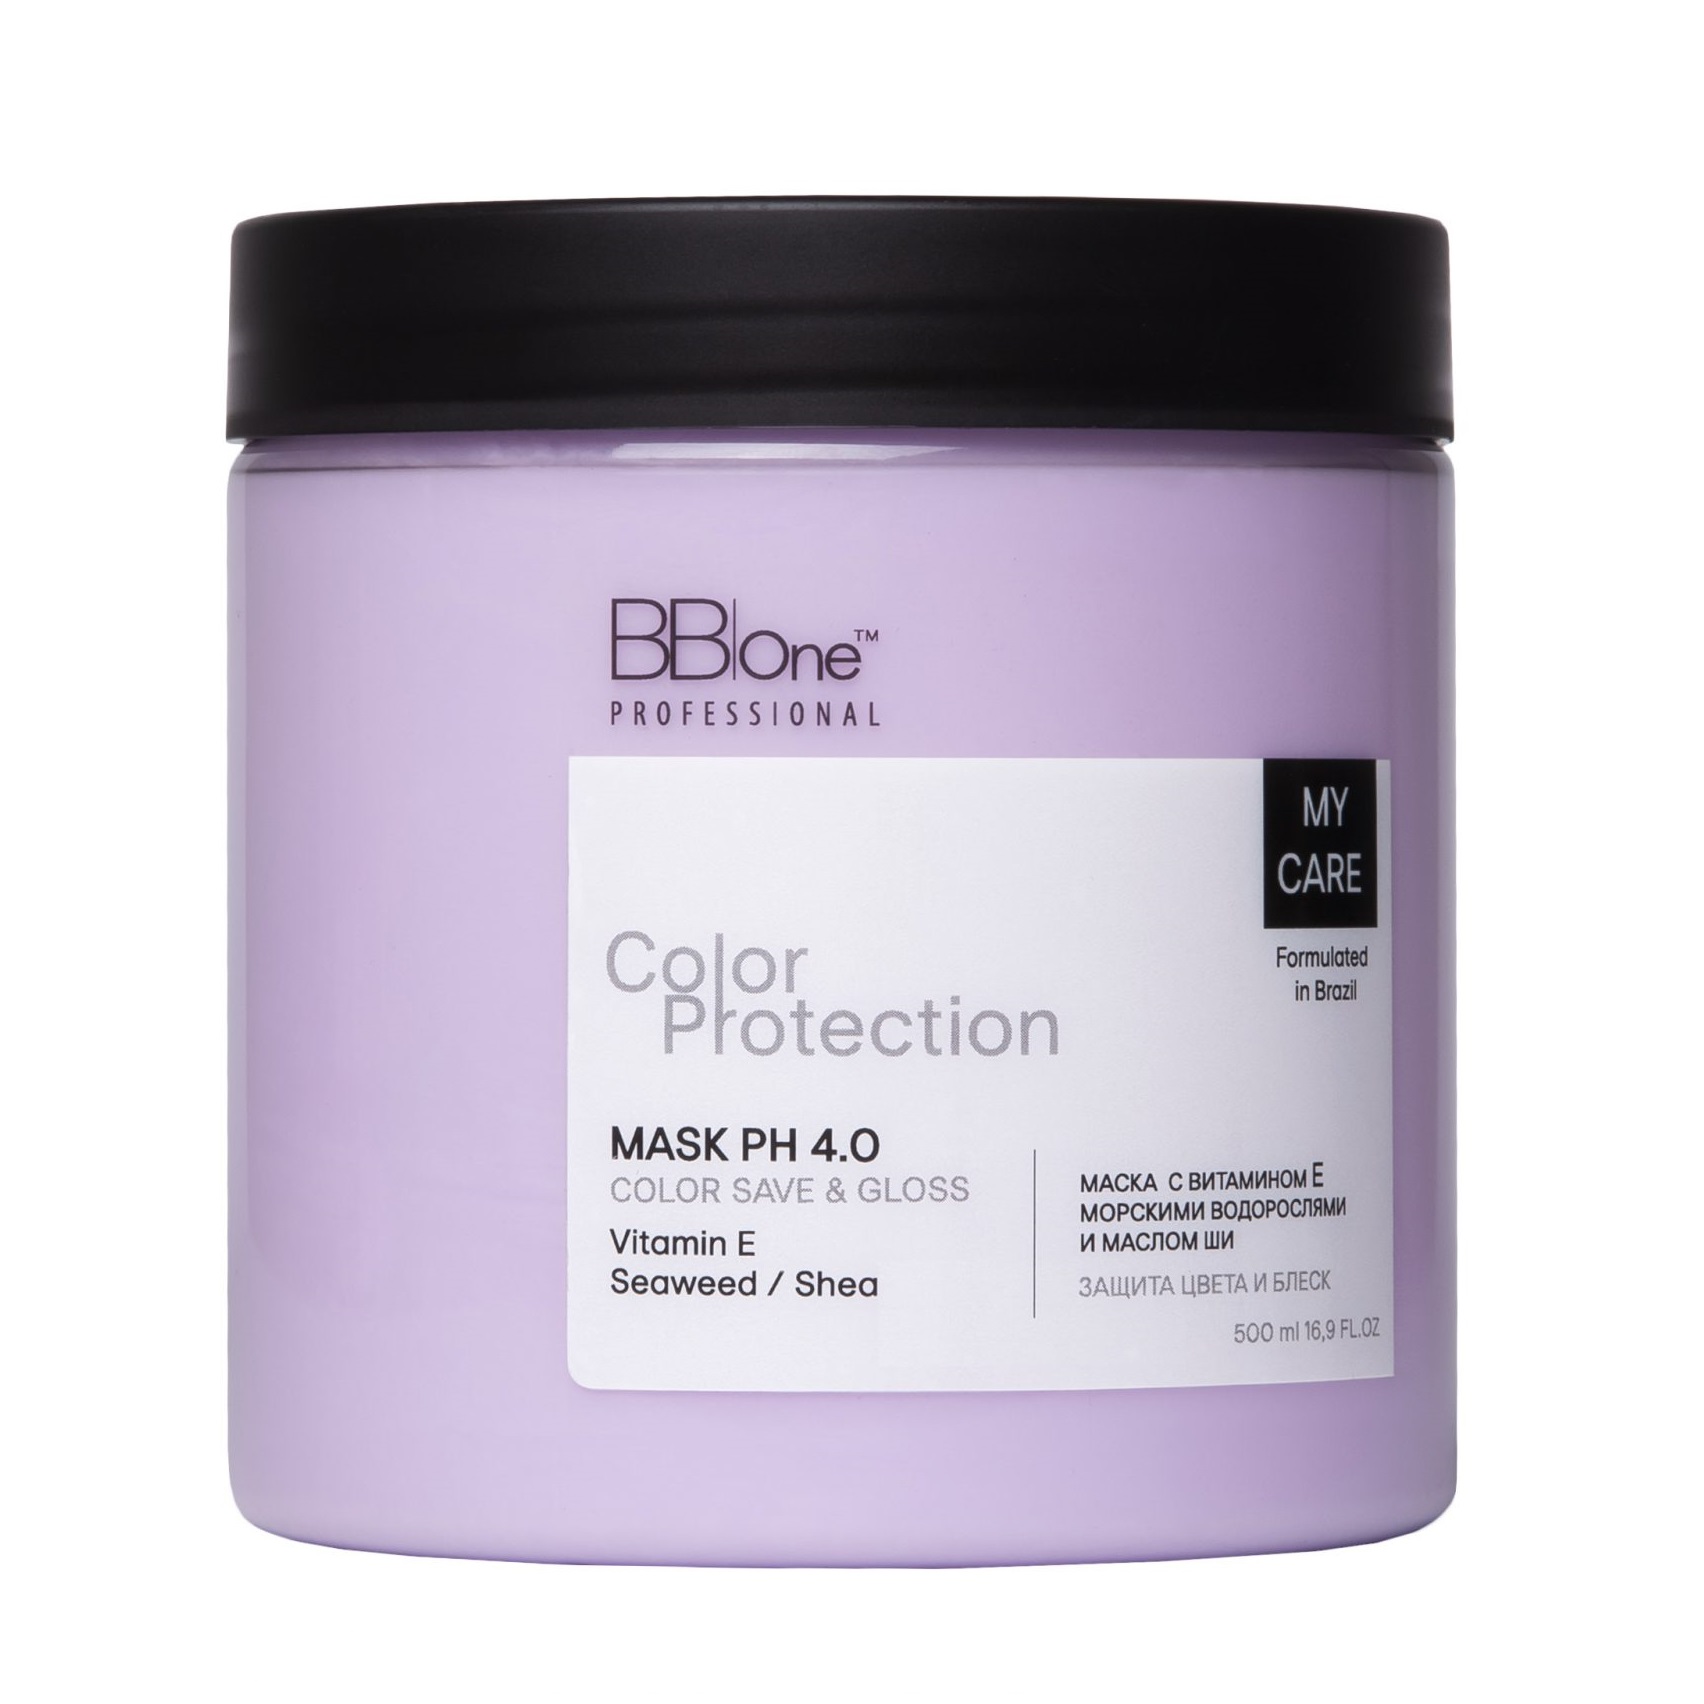 BB ONE, Маска для окрашенных волос Color Protection, 500 мл.